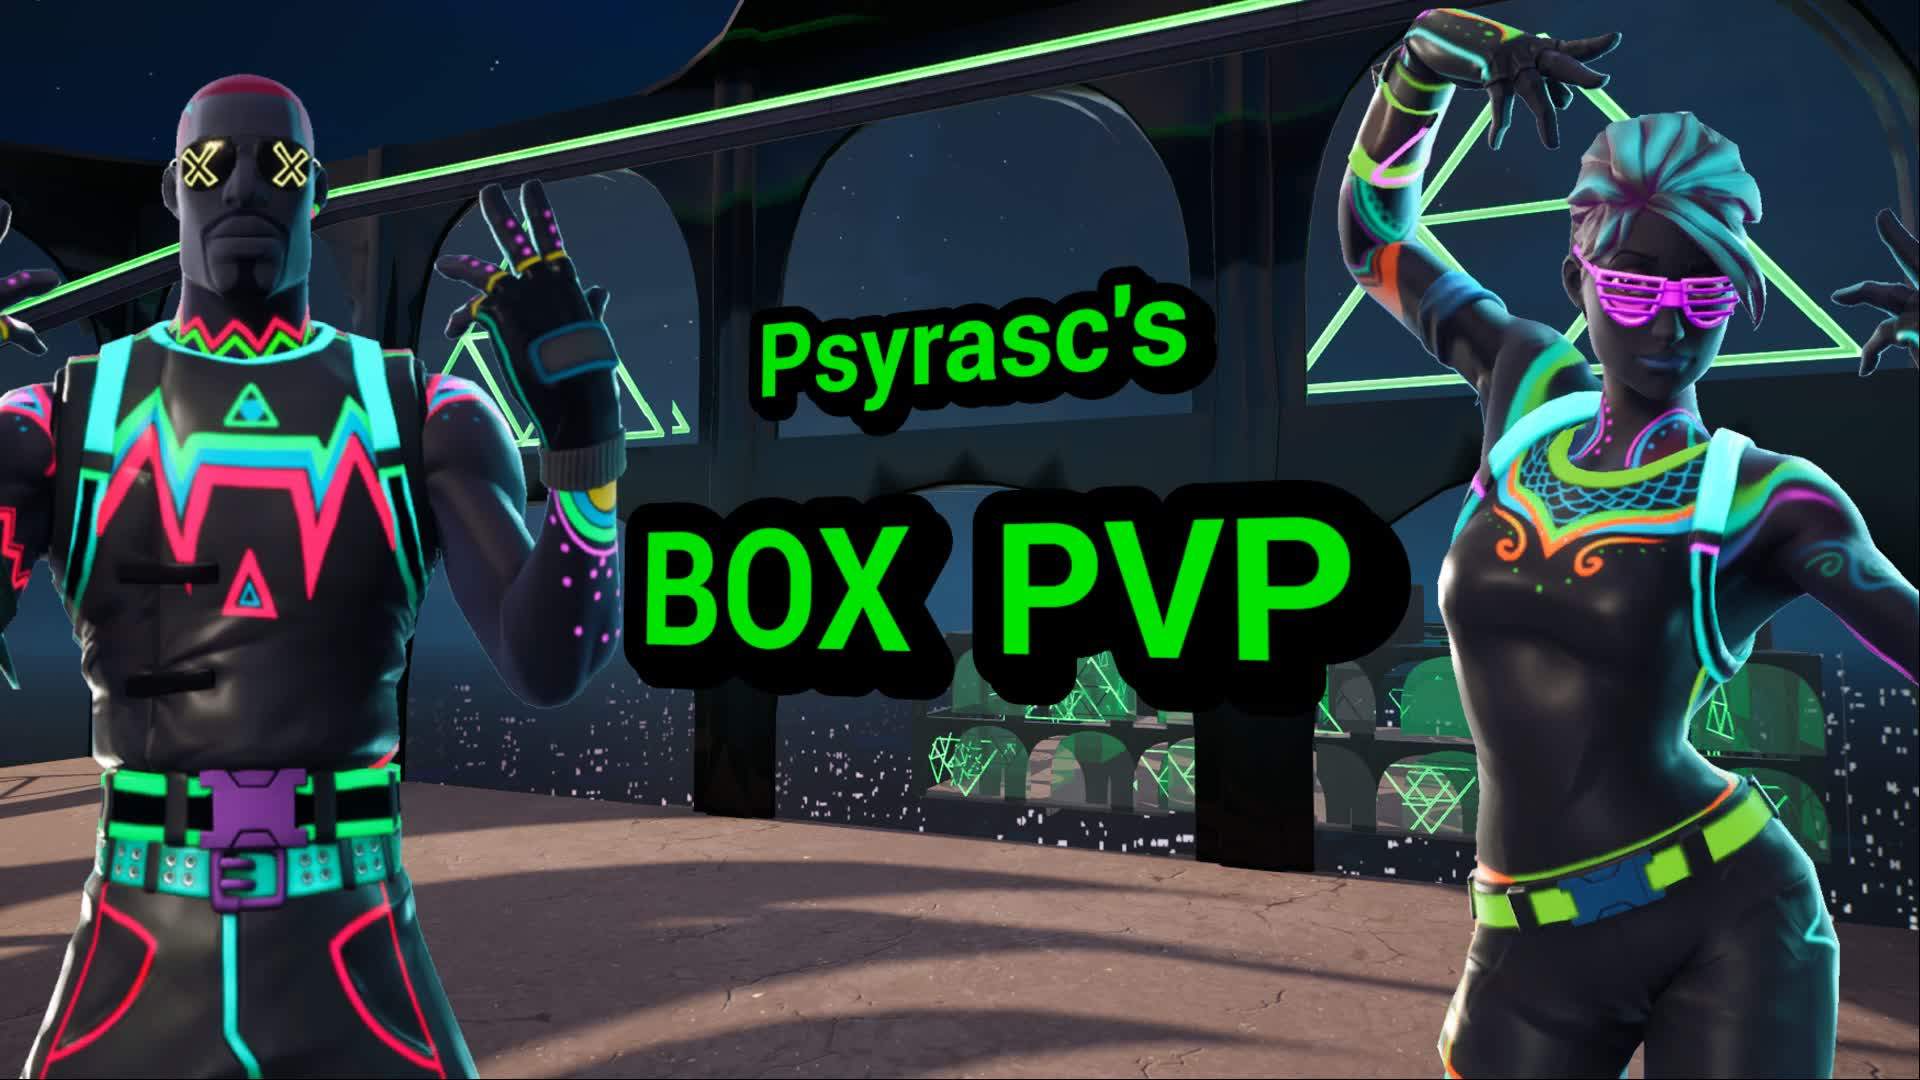 Psyrasc's BOX PVP